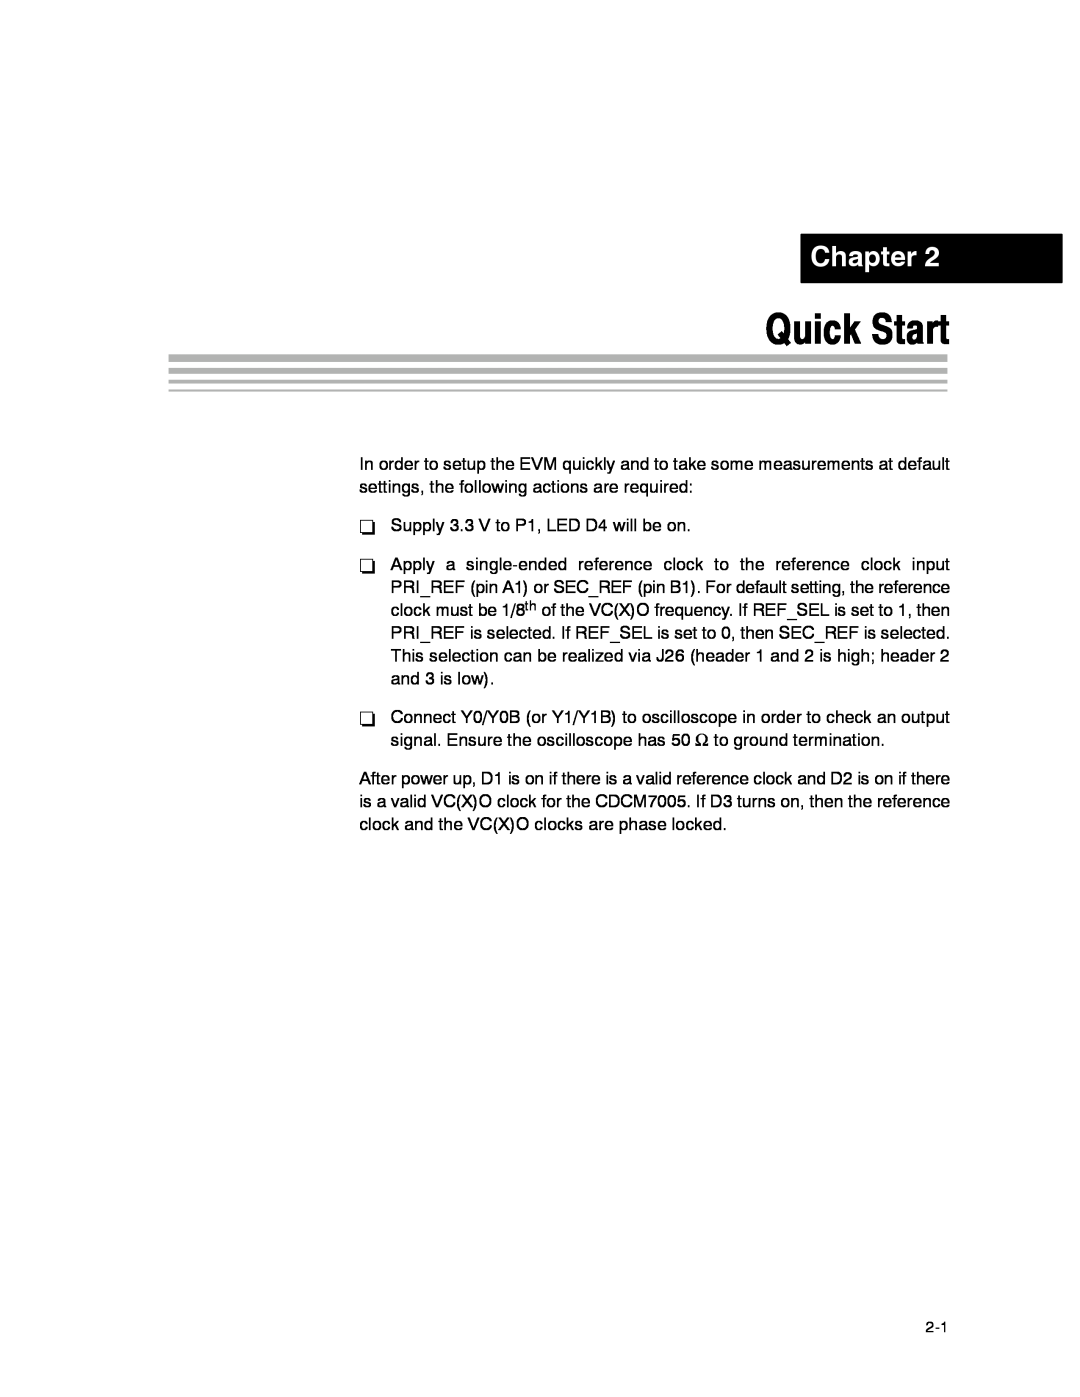 Texas Instruments CDCM7005 manual Quick Start, Chapter 